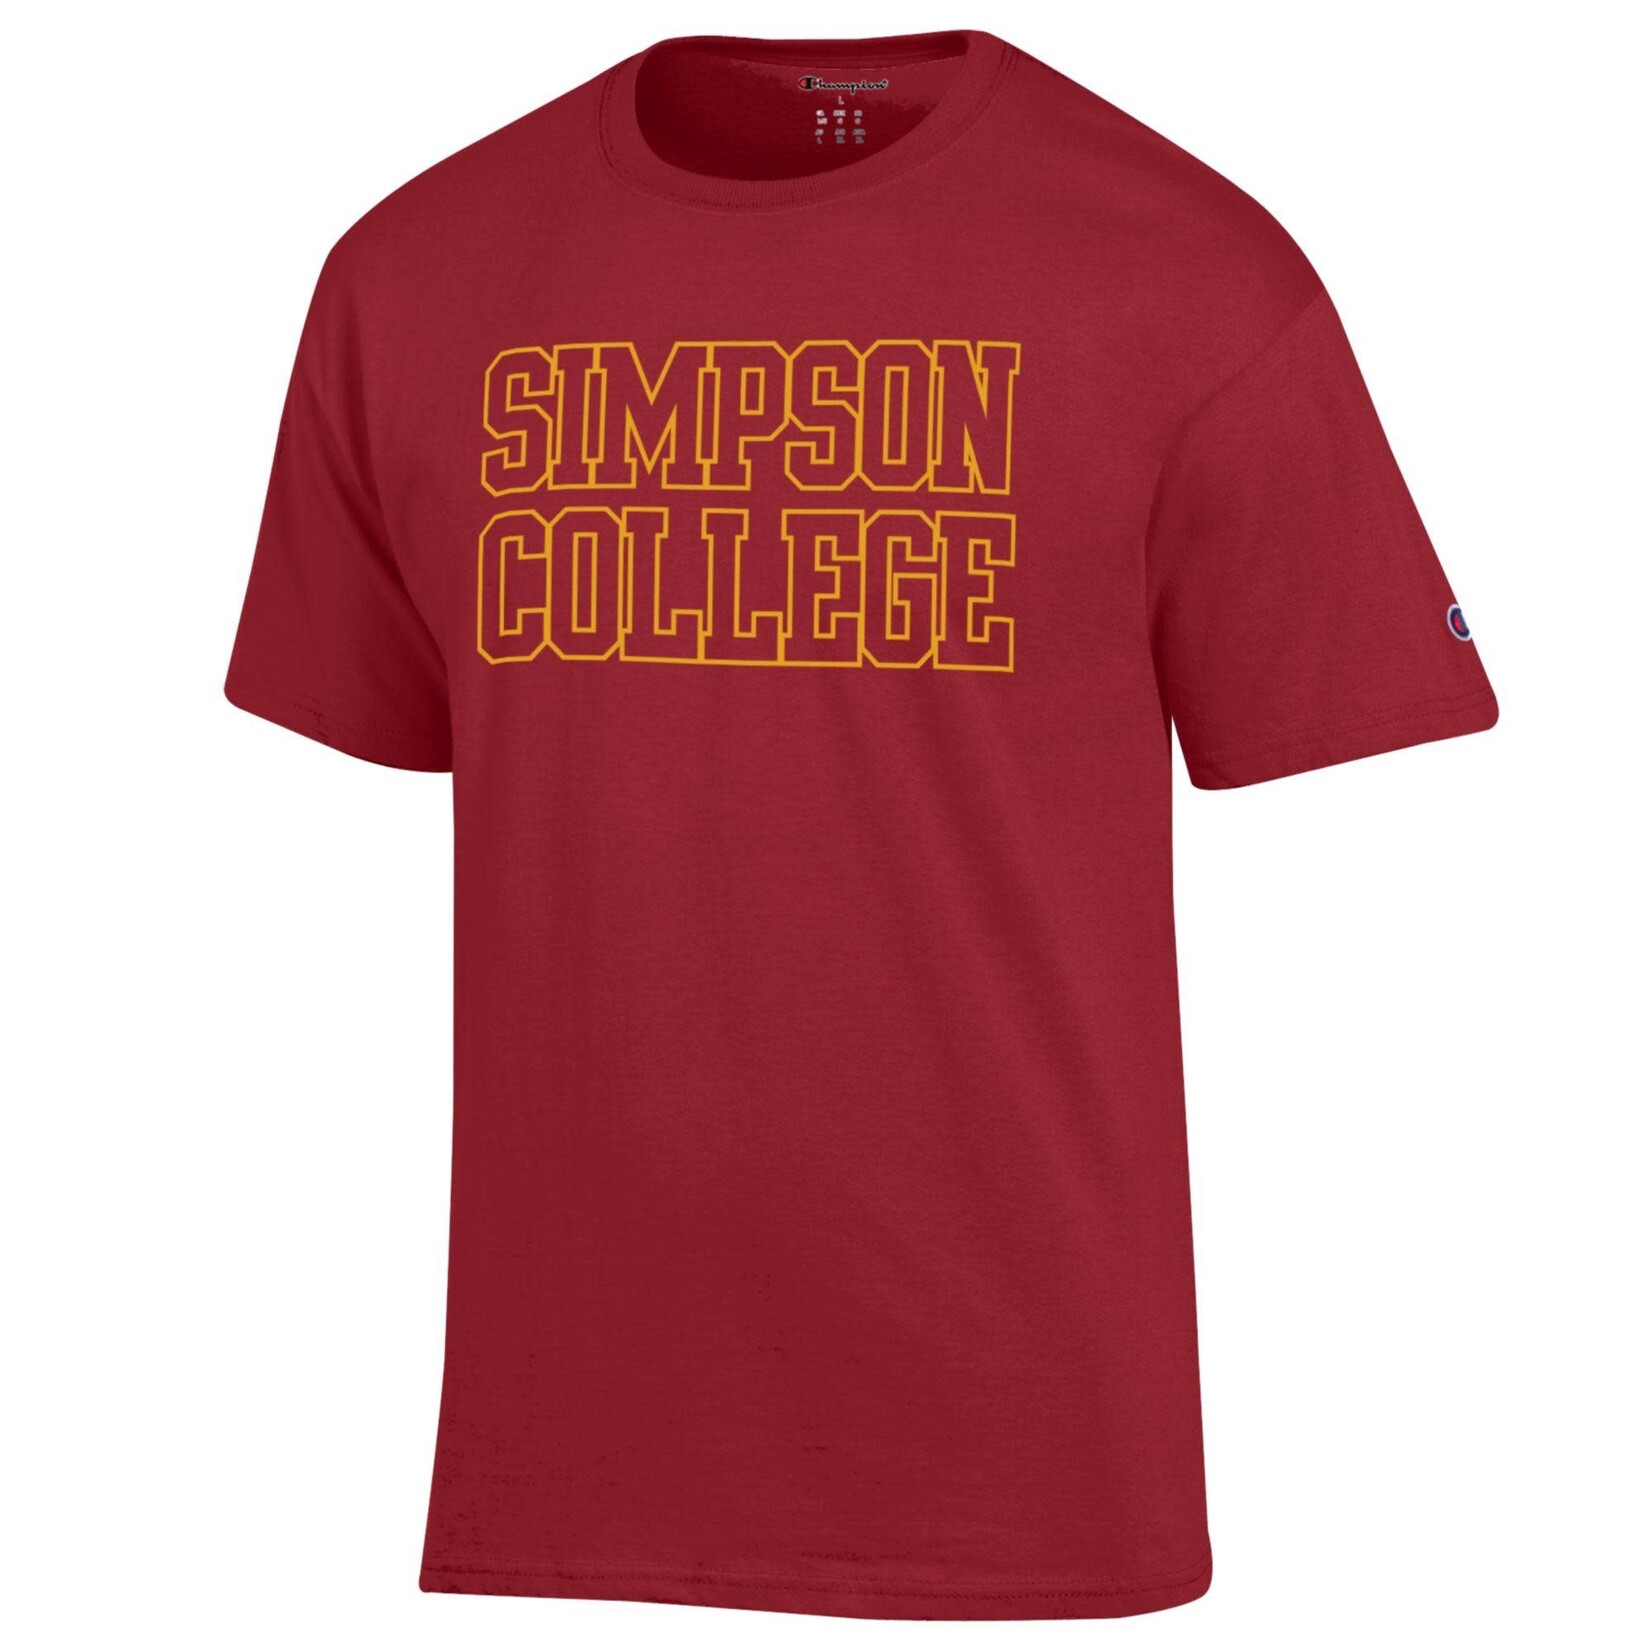 Champion Simpson College Tee Cardinal